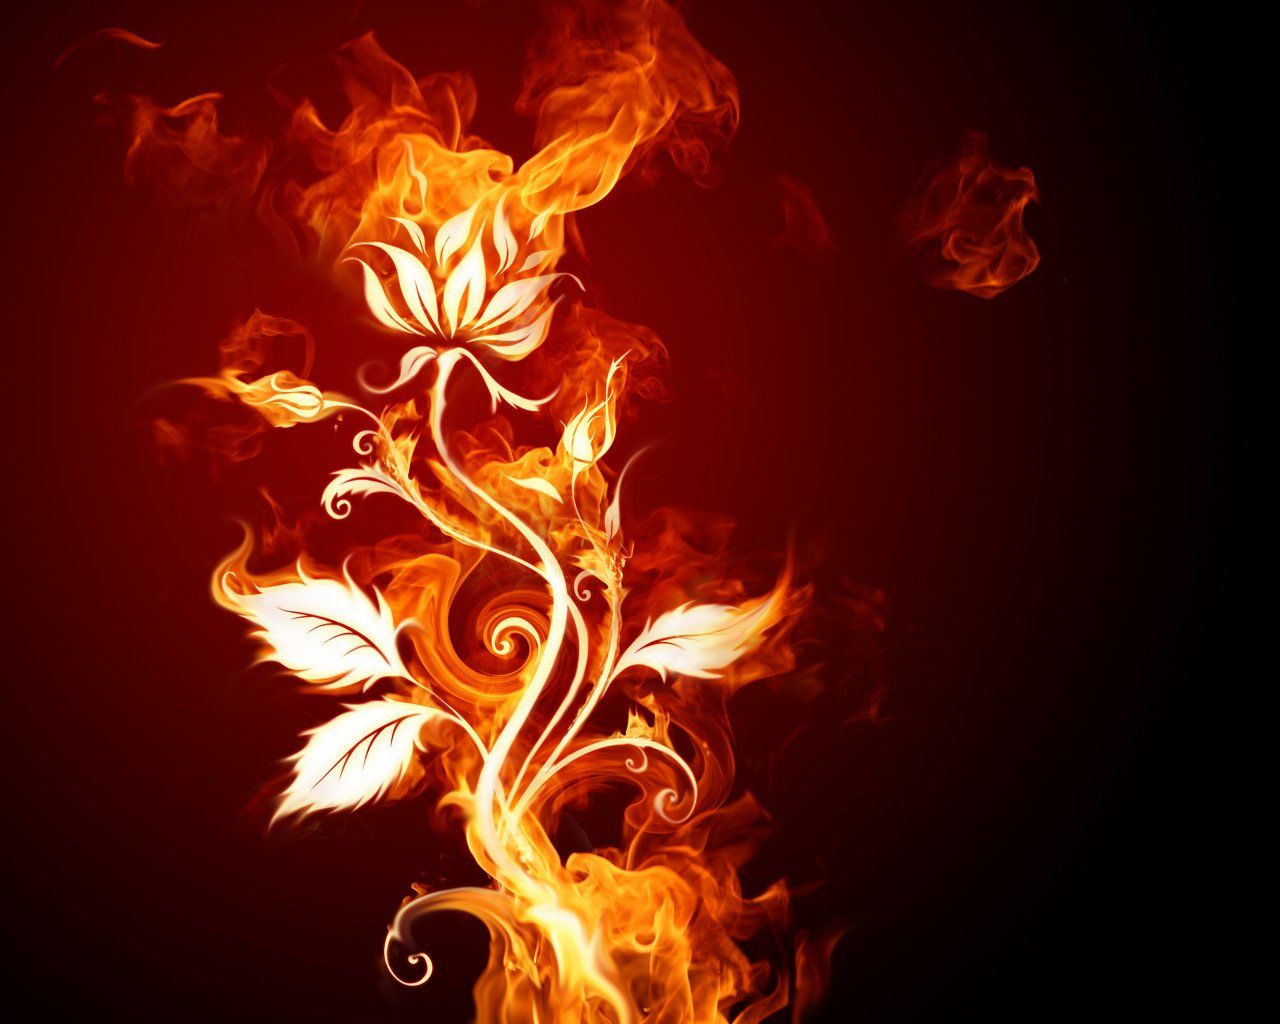 Free download burning fire wallpaper 17 [1280x1024] for your Desktop, Mobile & Tablet. Explore Fire Wallpaper. Fire Truck Wallpaper, Blue Fire Wallpaper, 3D Fire Wallpaper